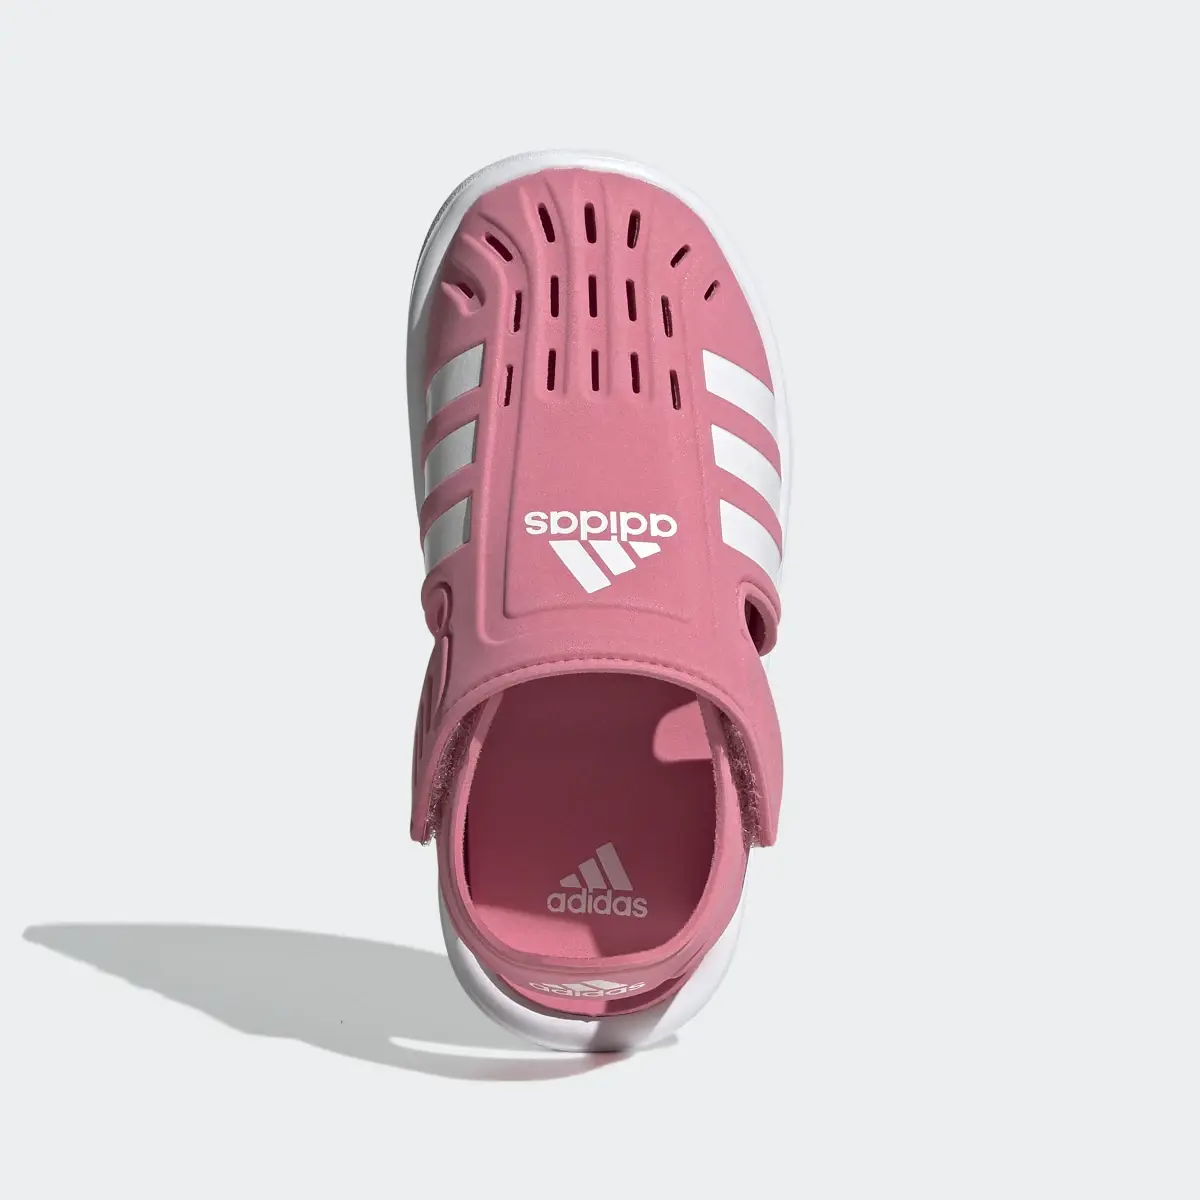 Adidas Summer Closed Toe Water Sandale. 3